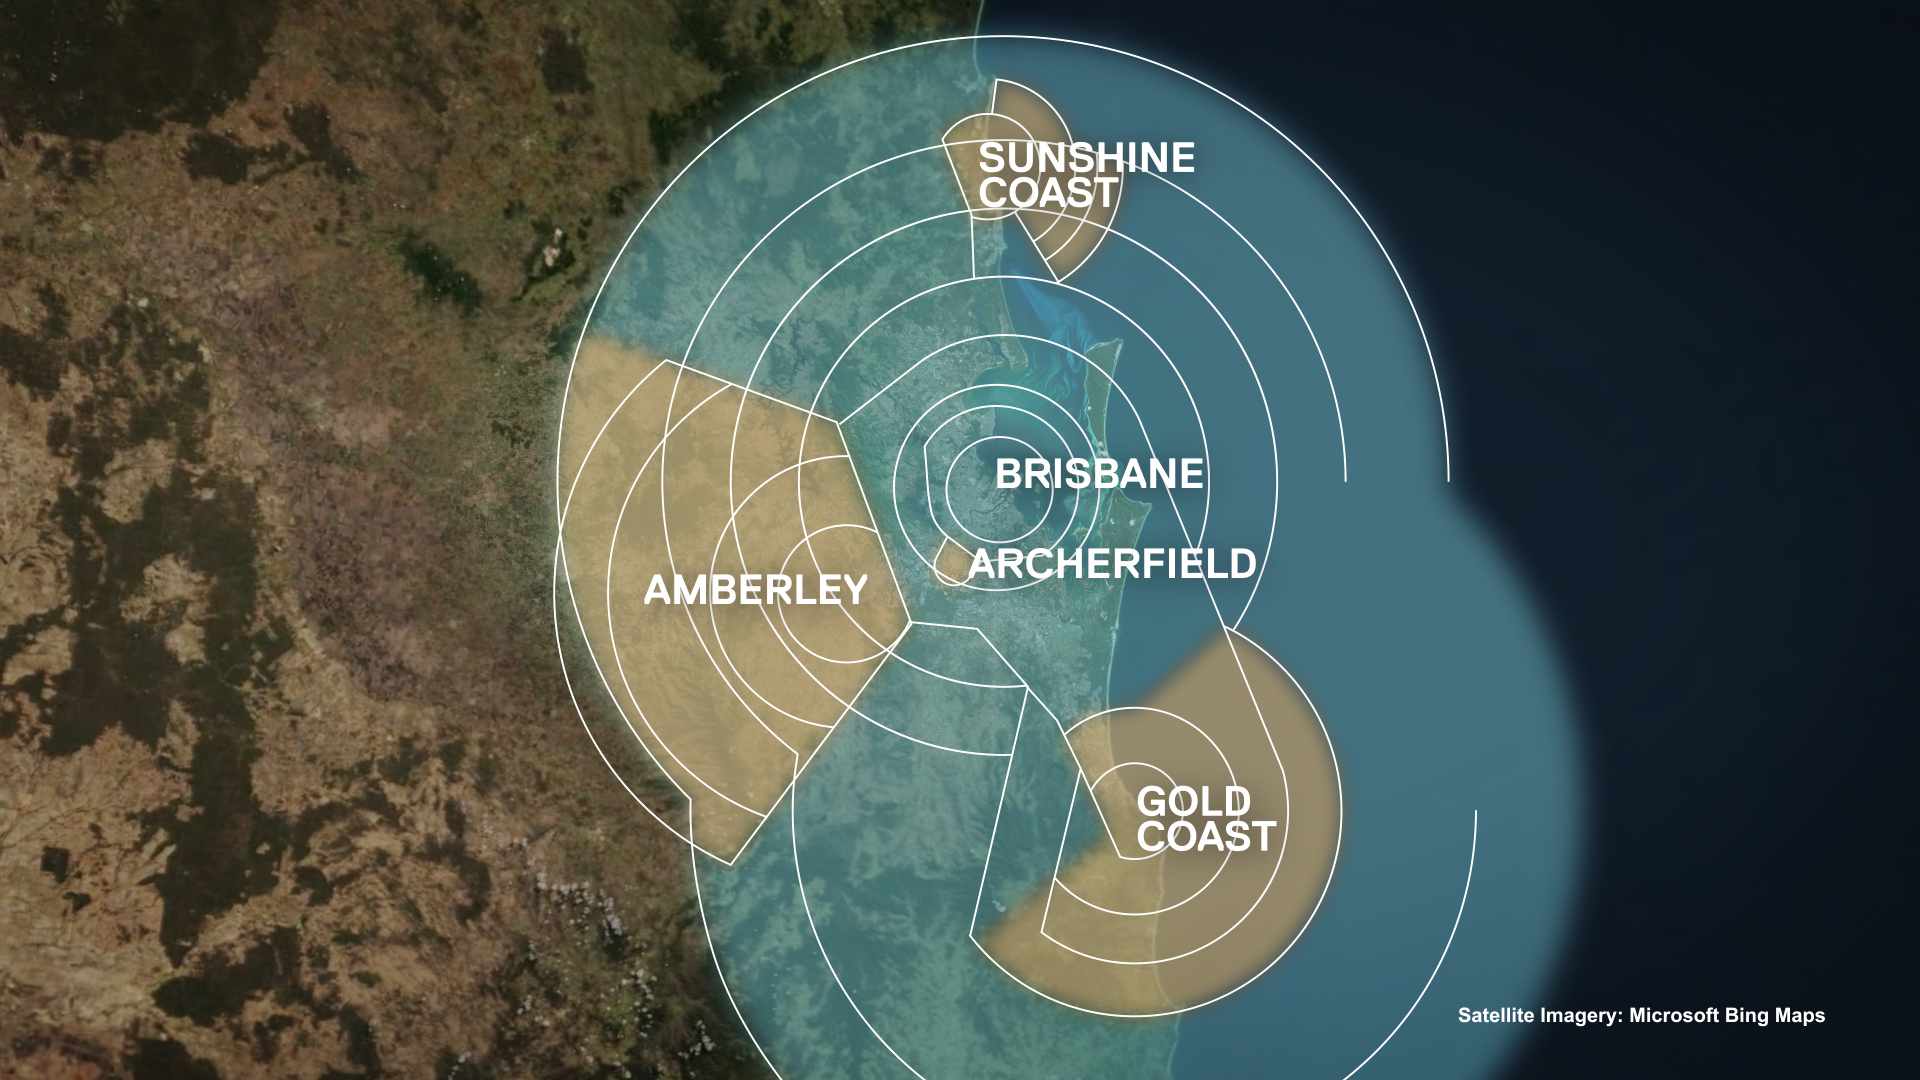 The Brisbane Basin includes the Sunshine Coast, Gold Coast, Amberley and Archerfield